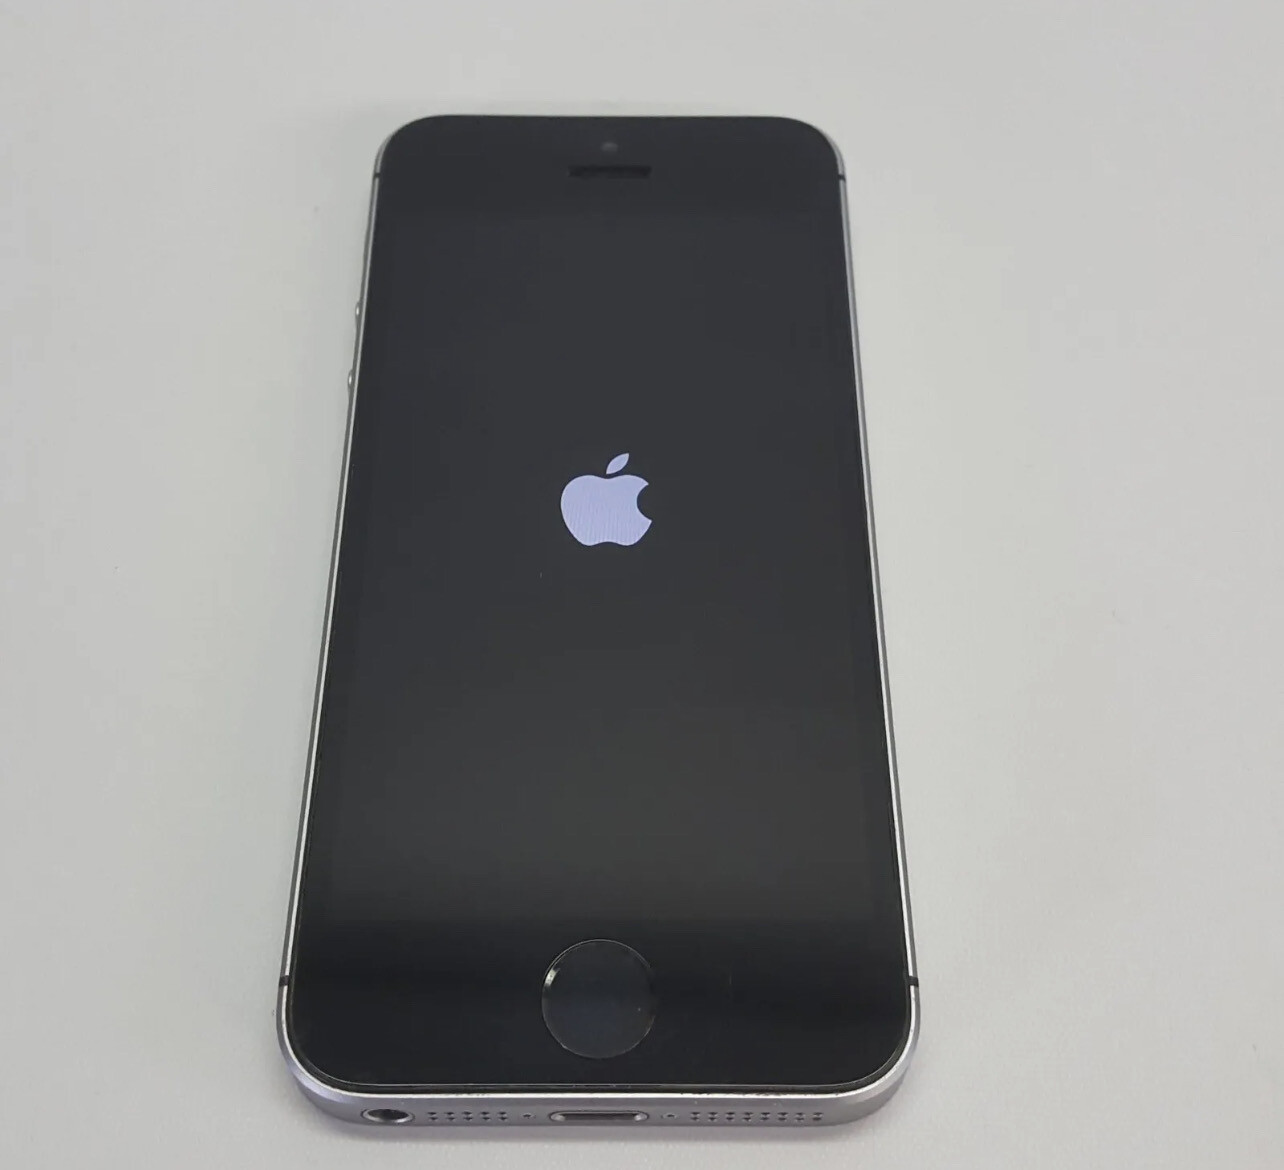 Apple iPhone SE 1st Gen GSM Unlocked 16GB Space Grey